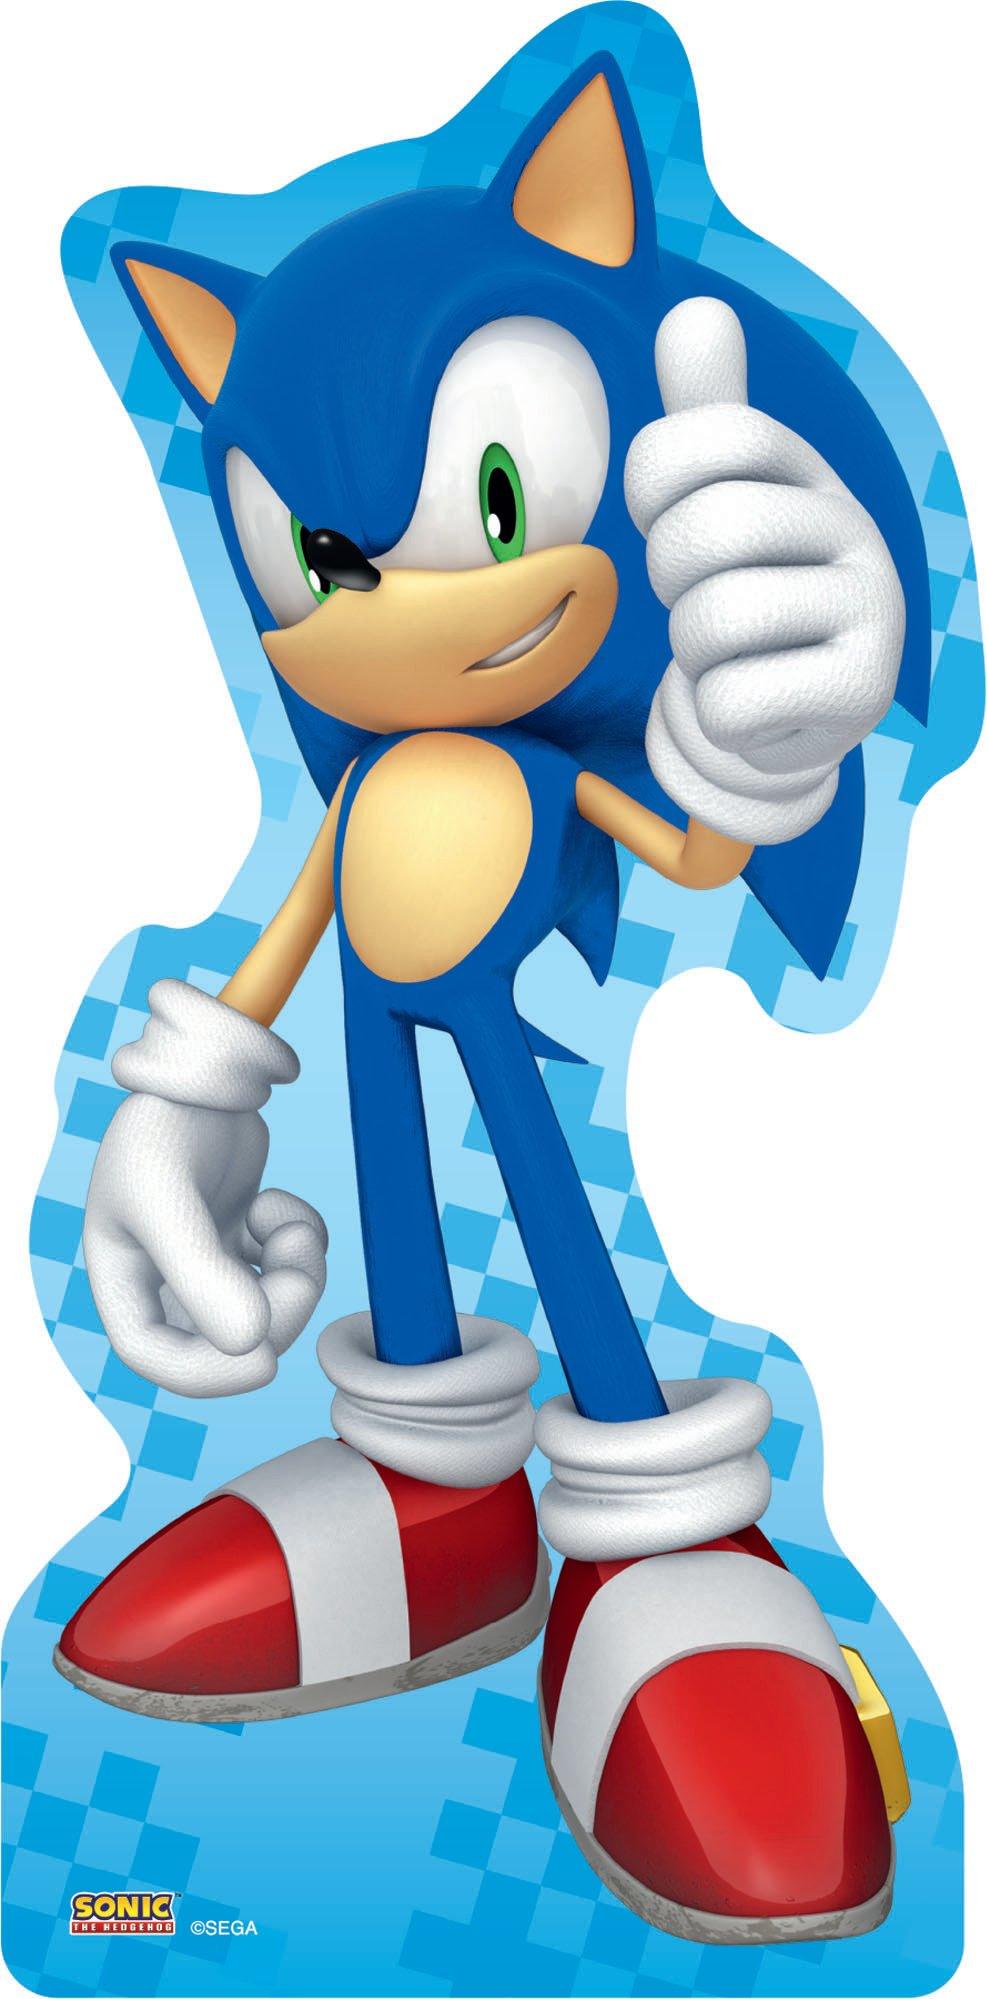 Sonic the Hedgehog Pose 1 Life-Size Cardboard Cutout